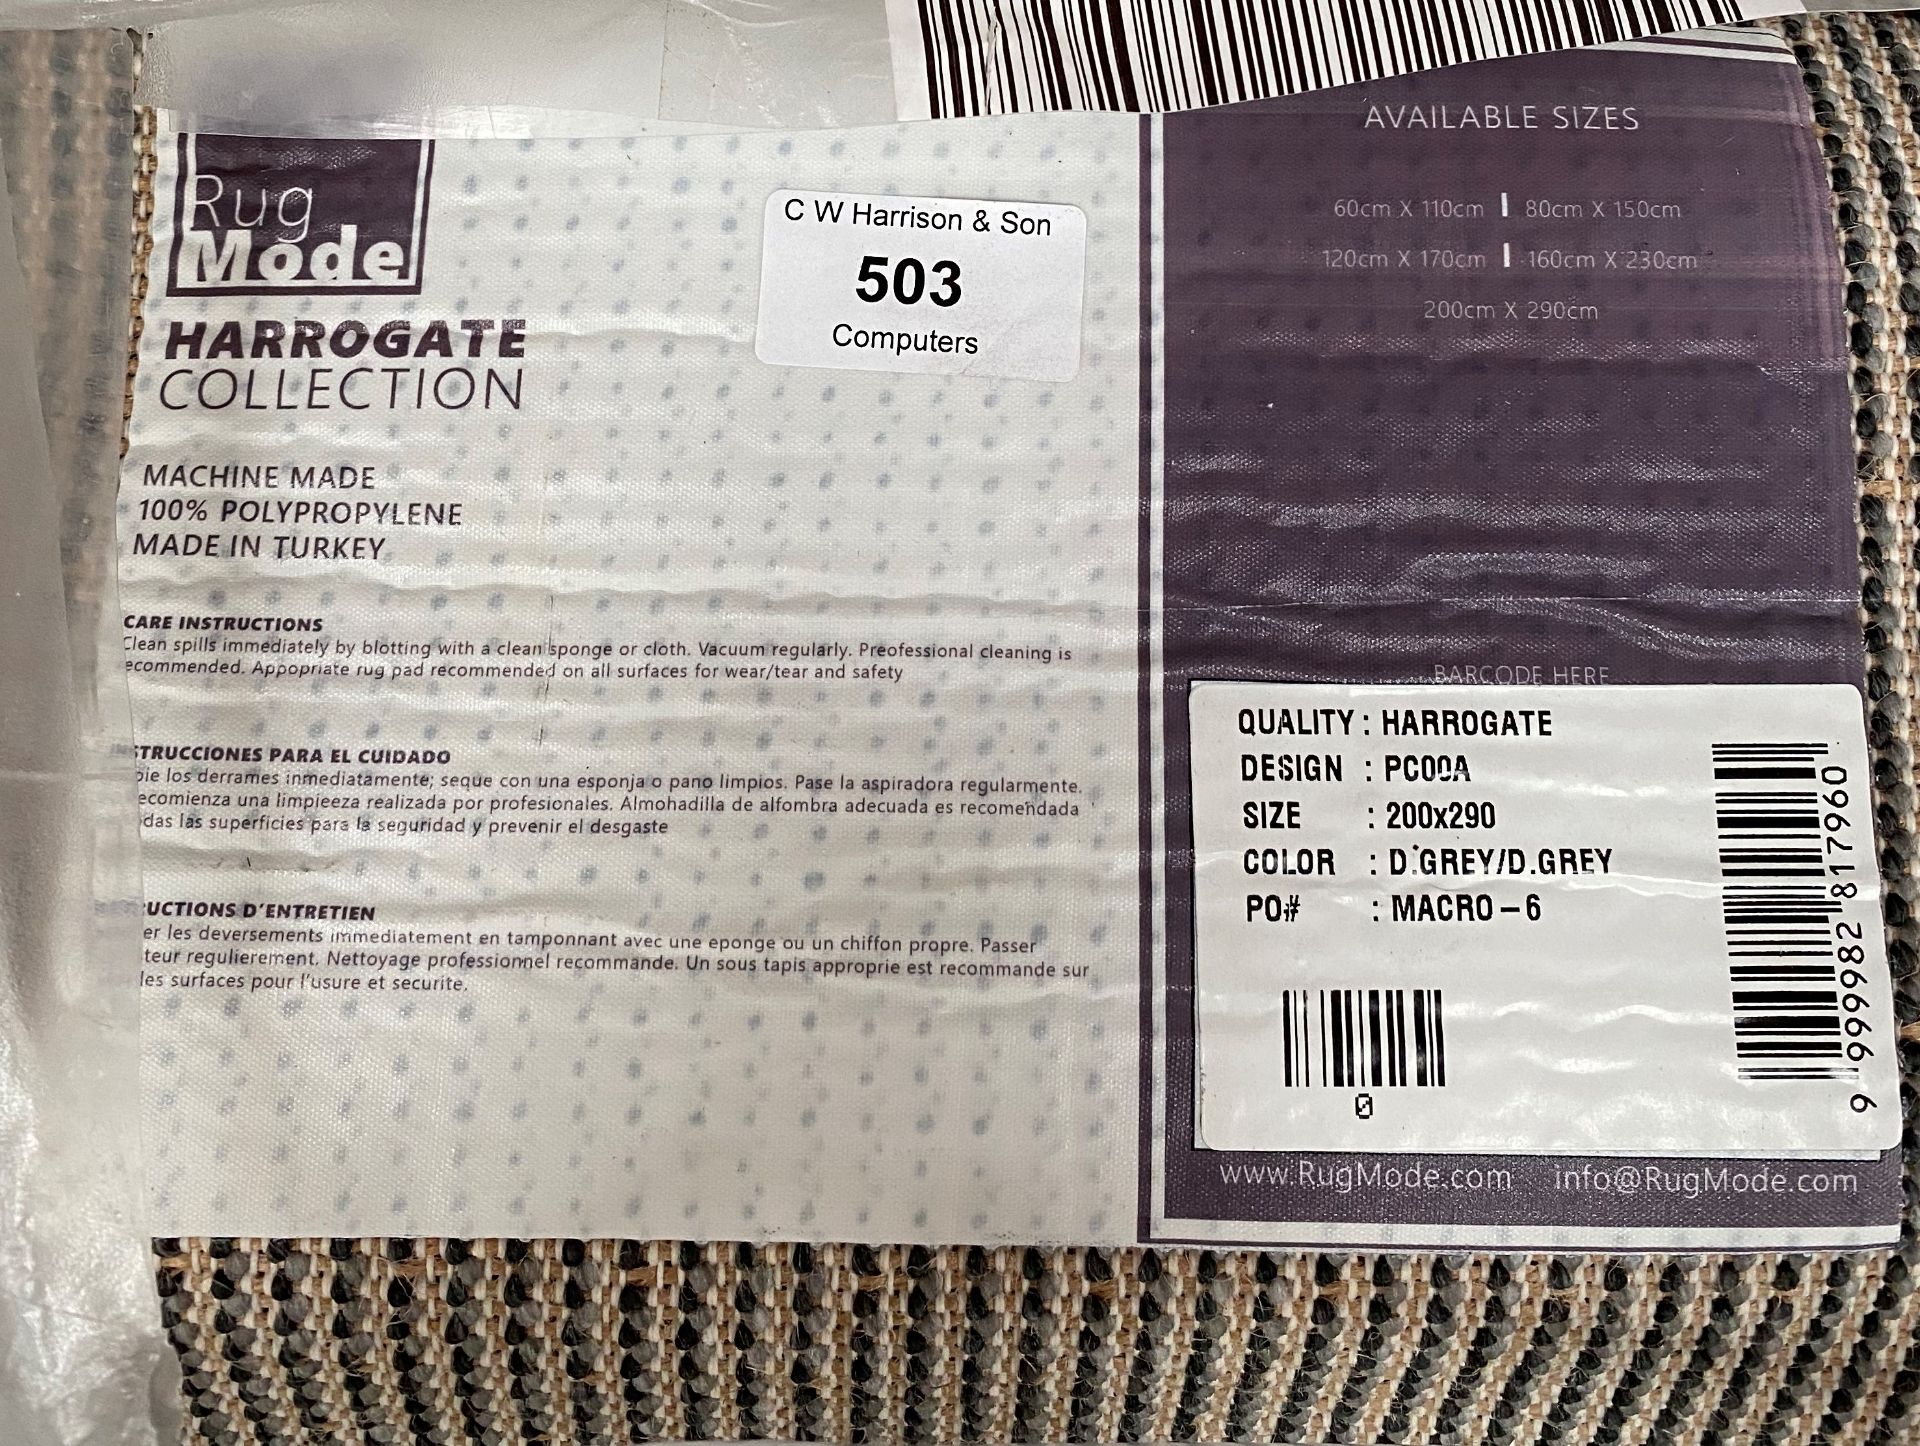 A Rug Mode Harrogate collection 'PC00A' dark grey rug - 200cm x 290cm - Image 2 of 3